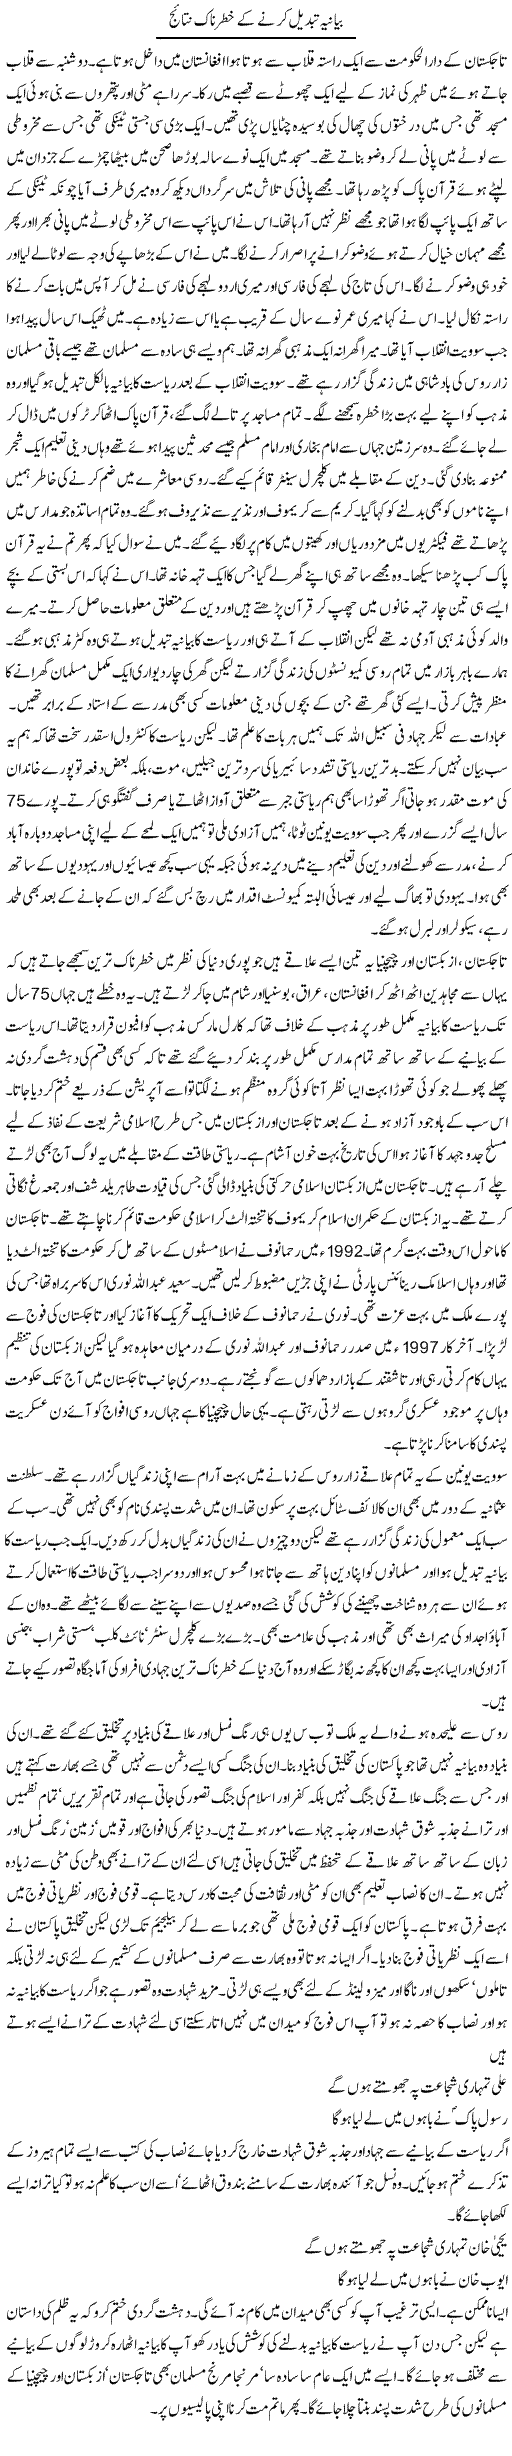 Bayania Tabdeel Kerne Ke Khatarnak Nataij | Orya Maqbool Jan | Daily Urdu Columns